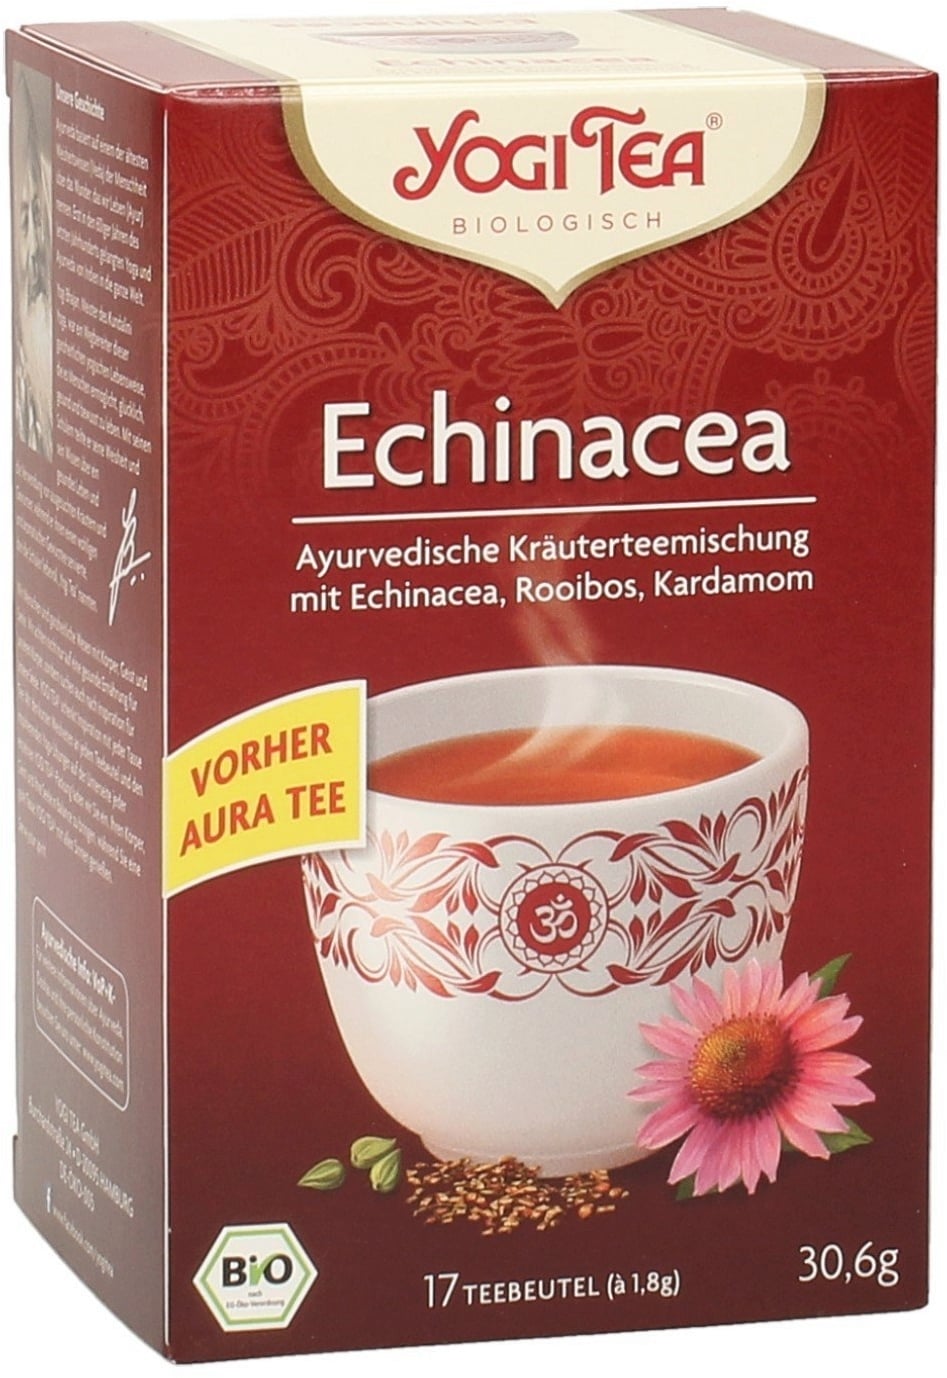 Yogi Tea Echinacea - Aura Tee